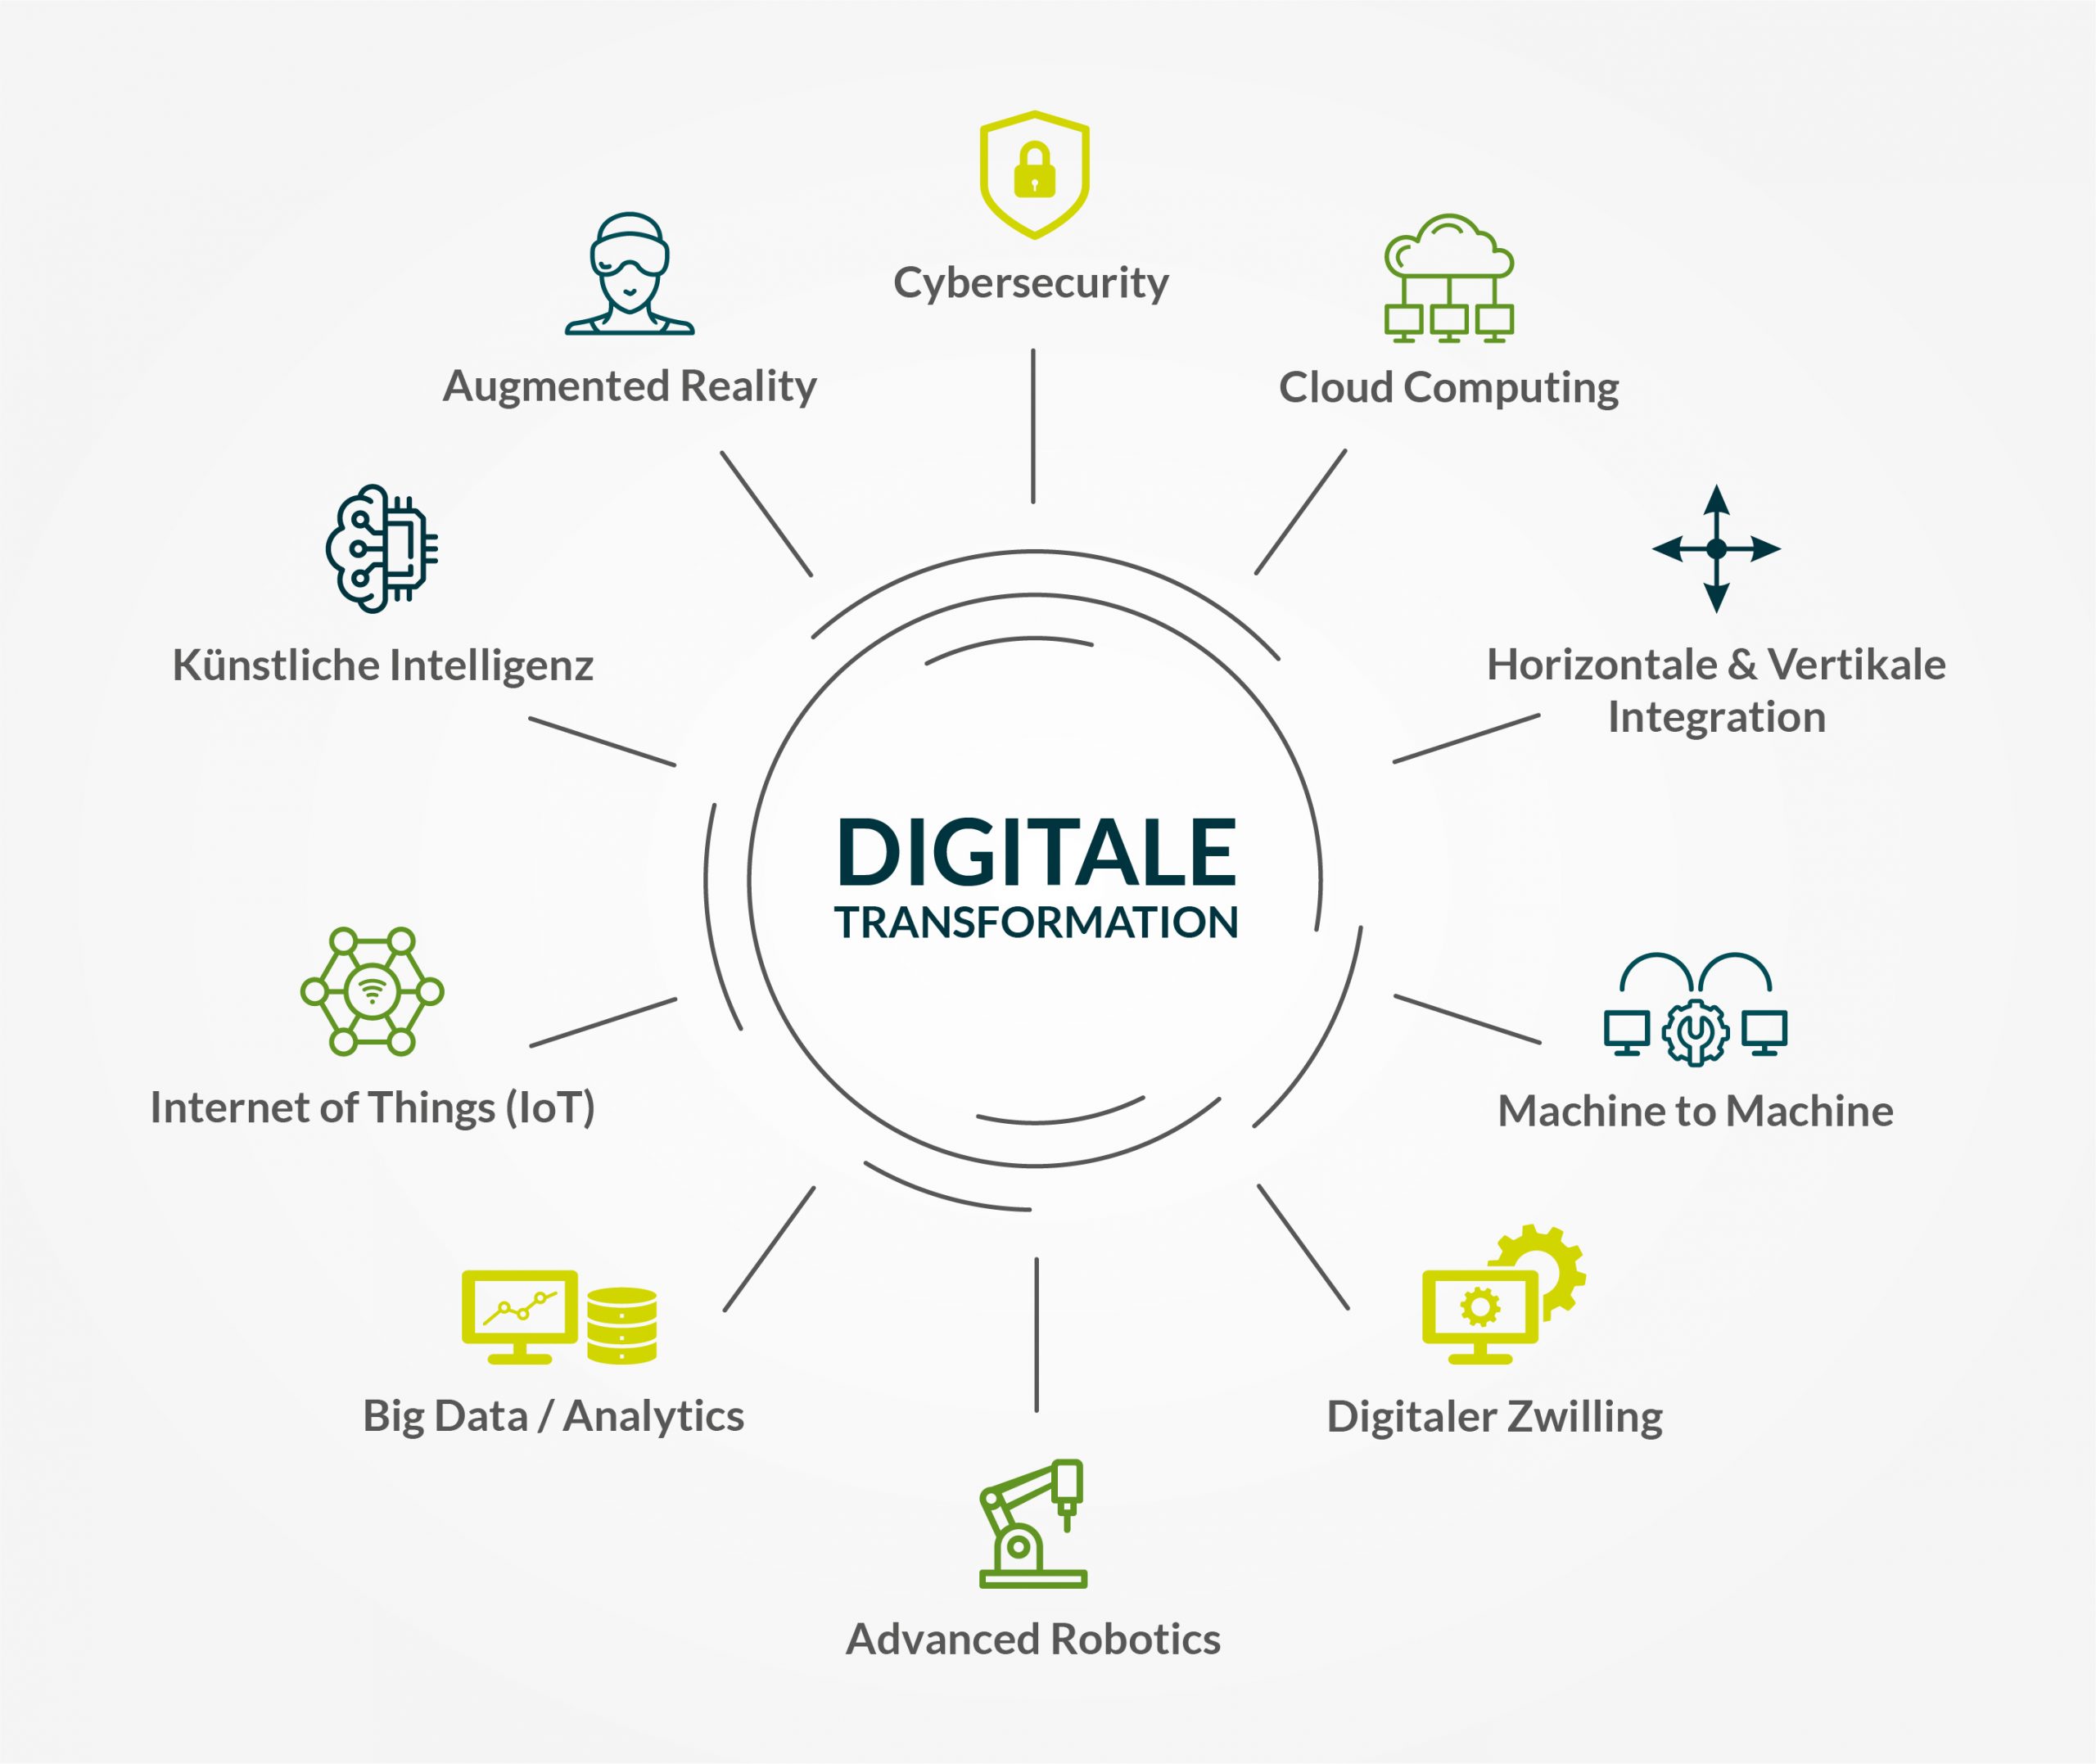 10 areas of digital transformation